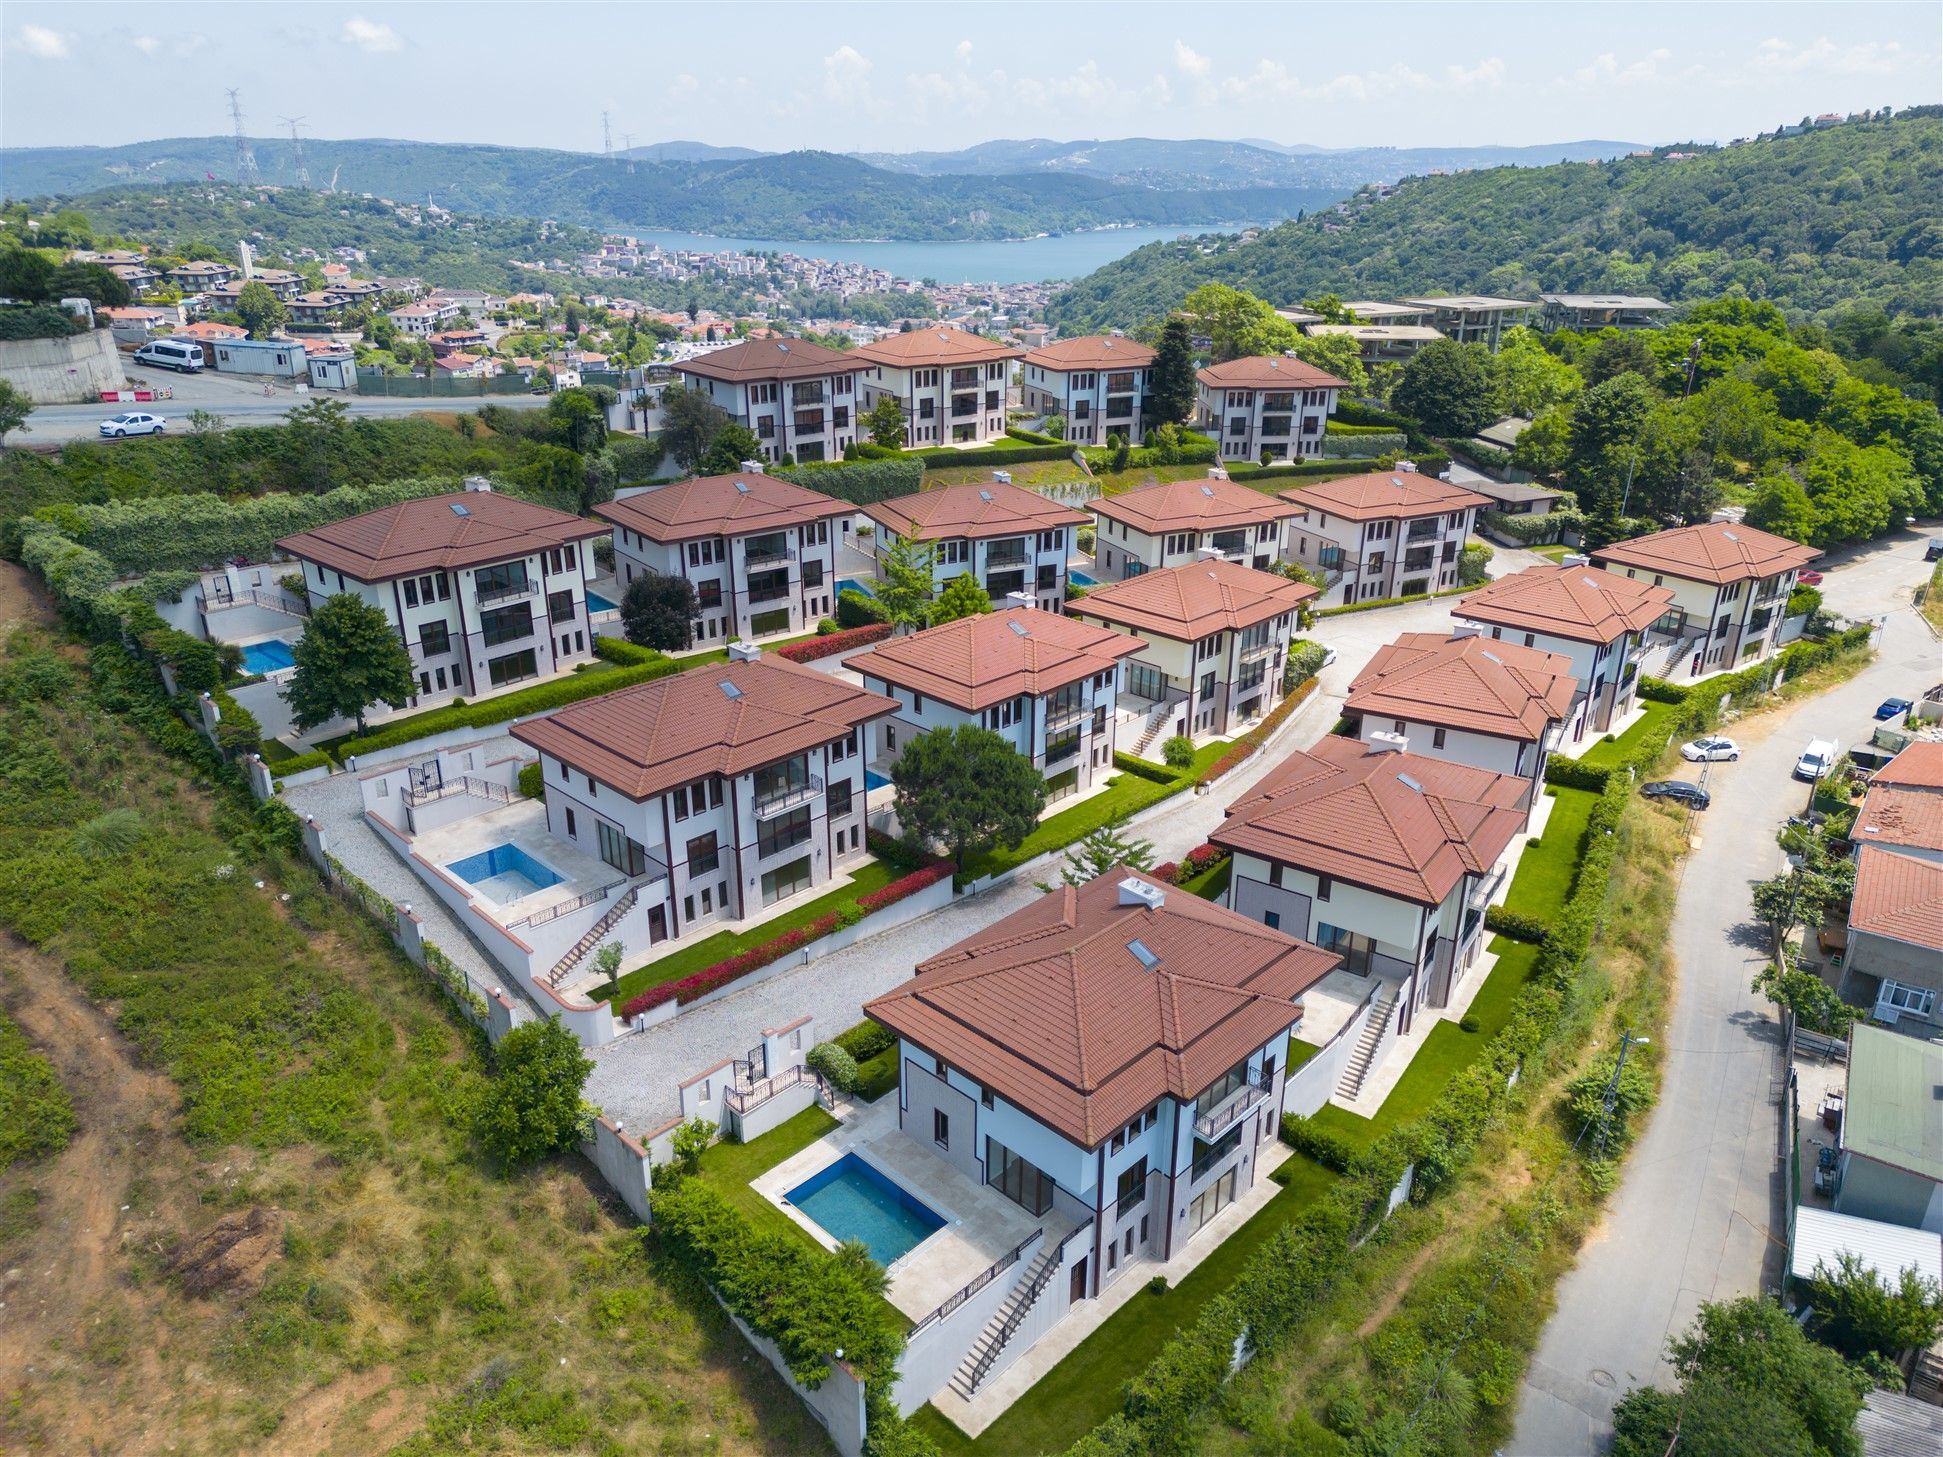 New villas in a prestigious Istanbul district - Sariyer